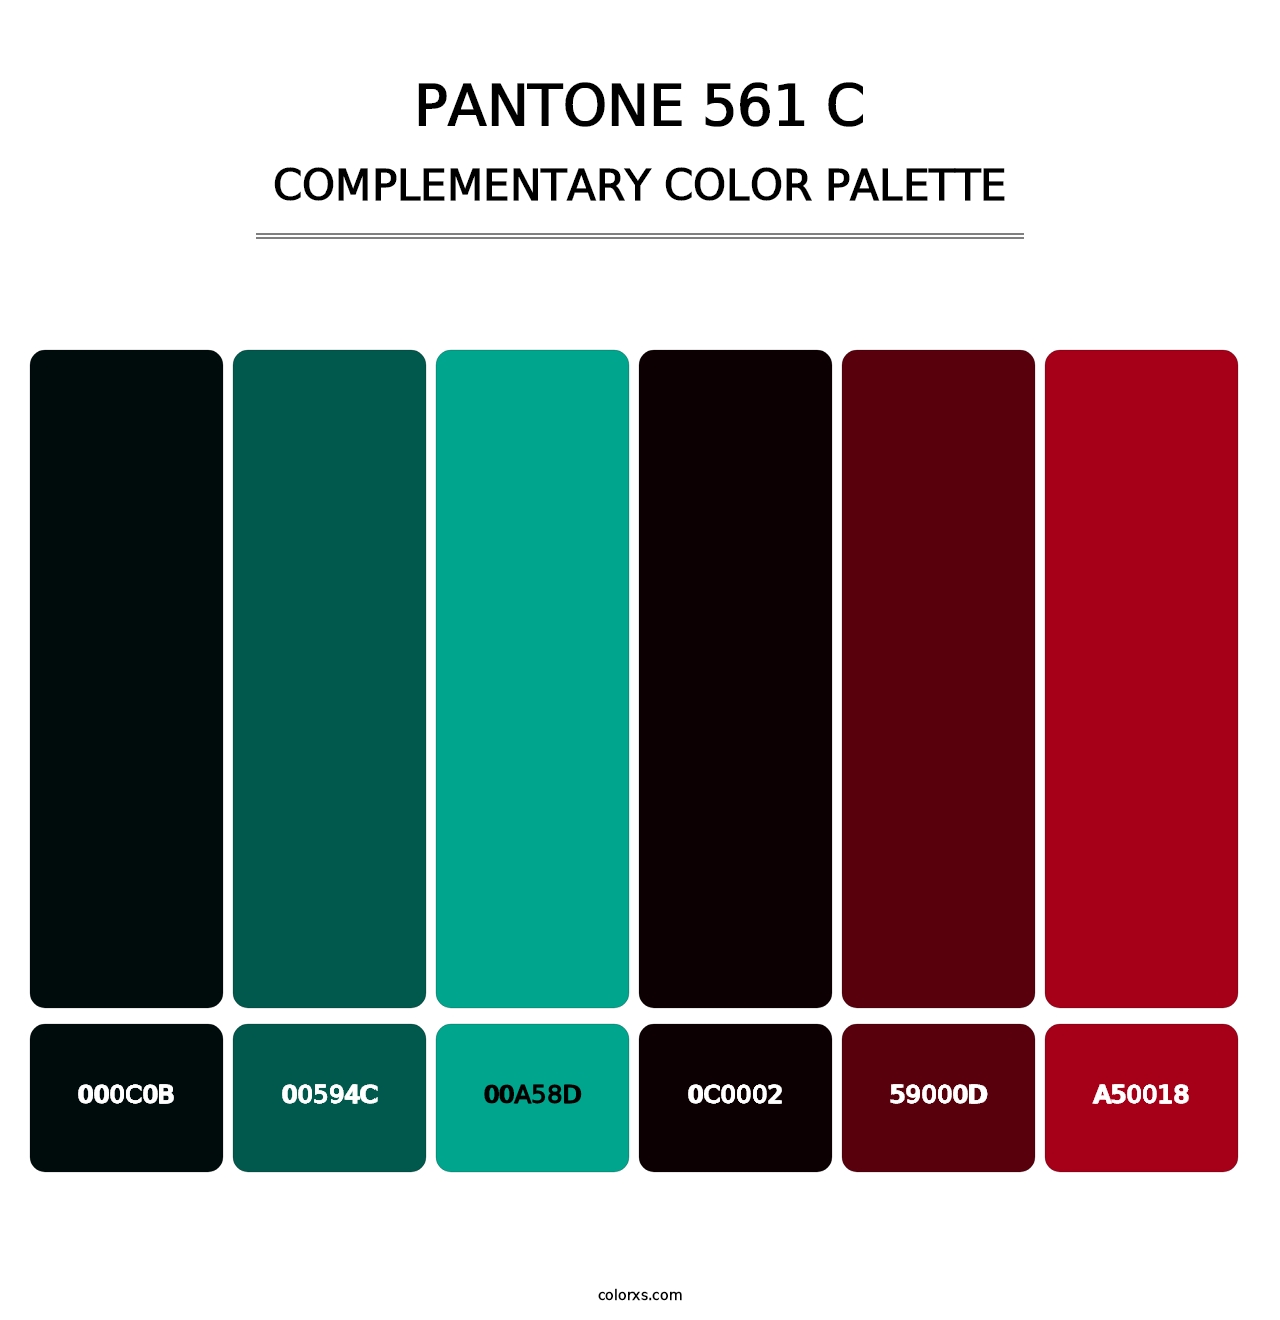 PANTONE 561 C - Complementary Color Palette